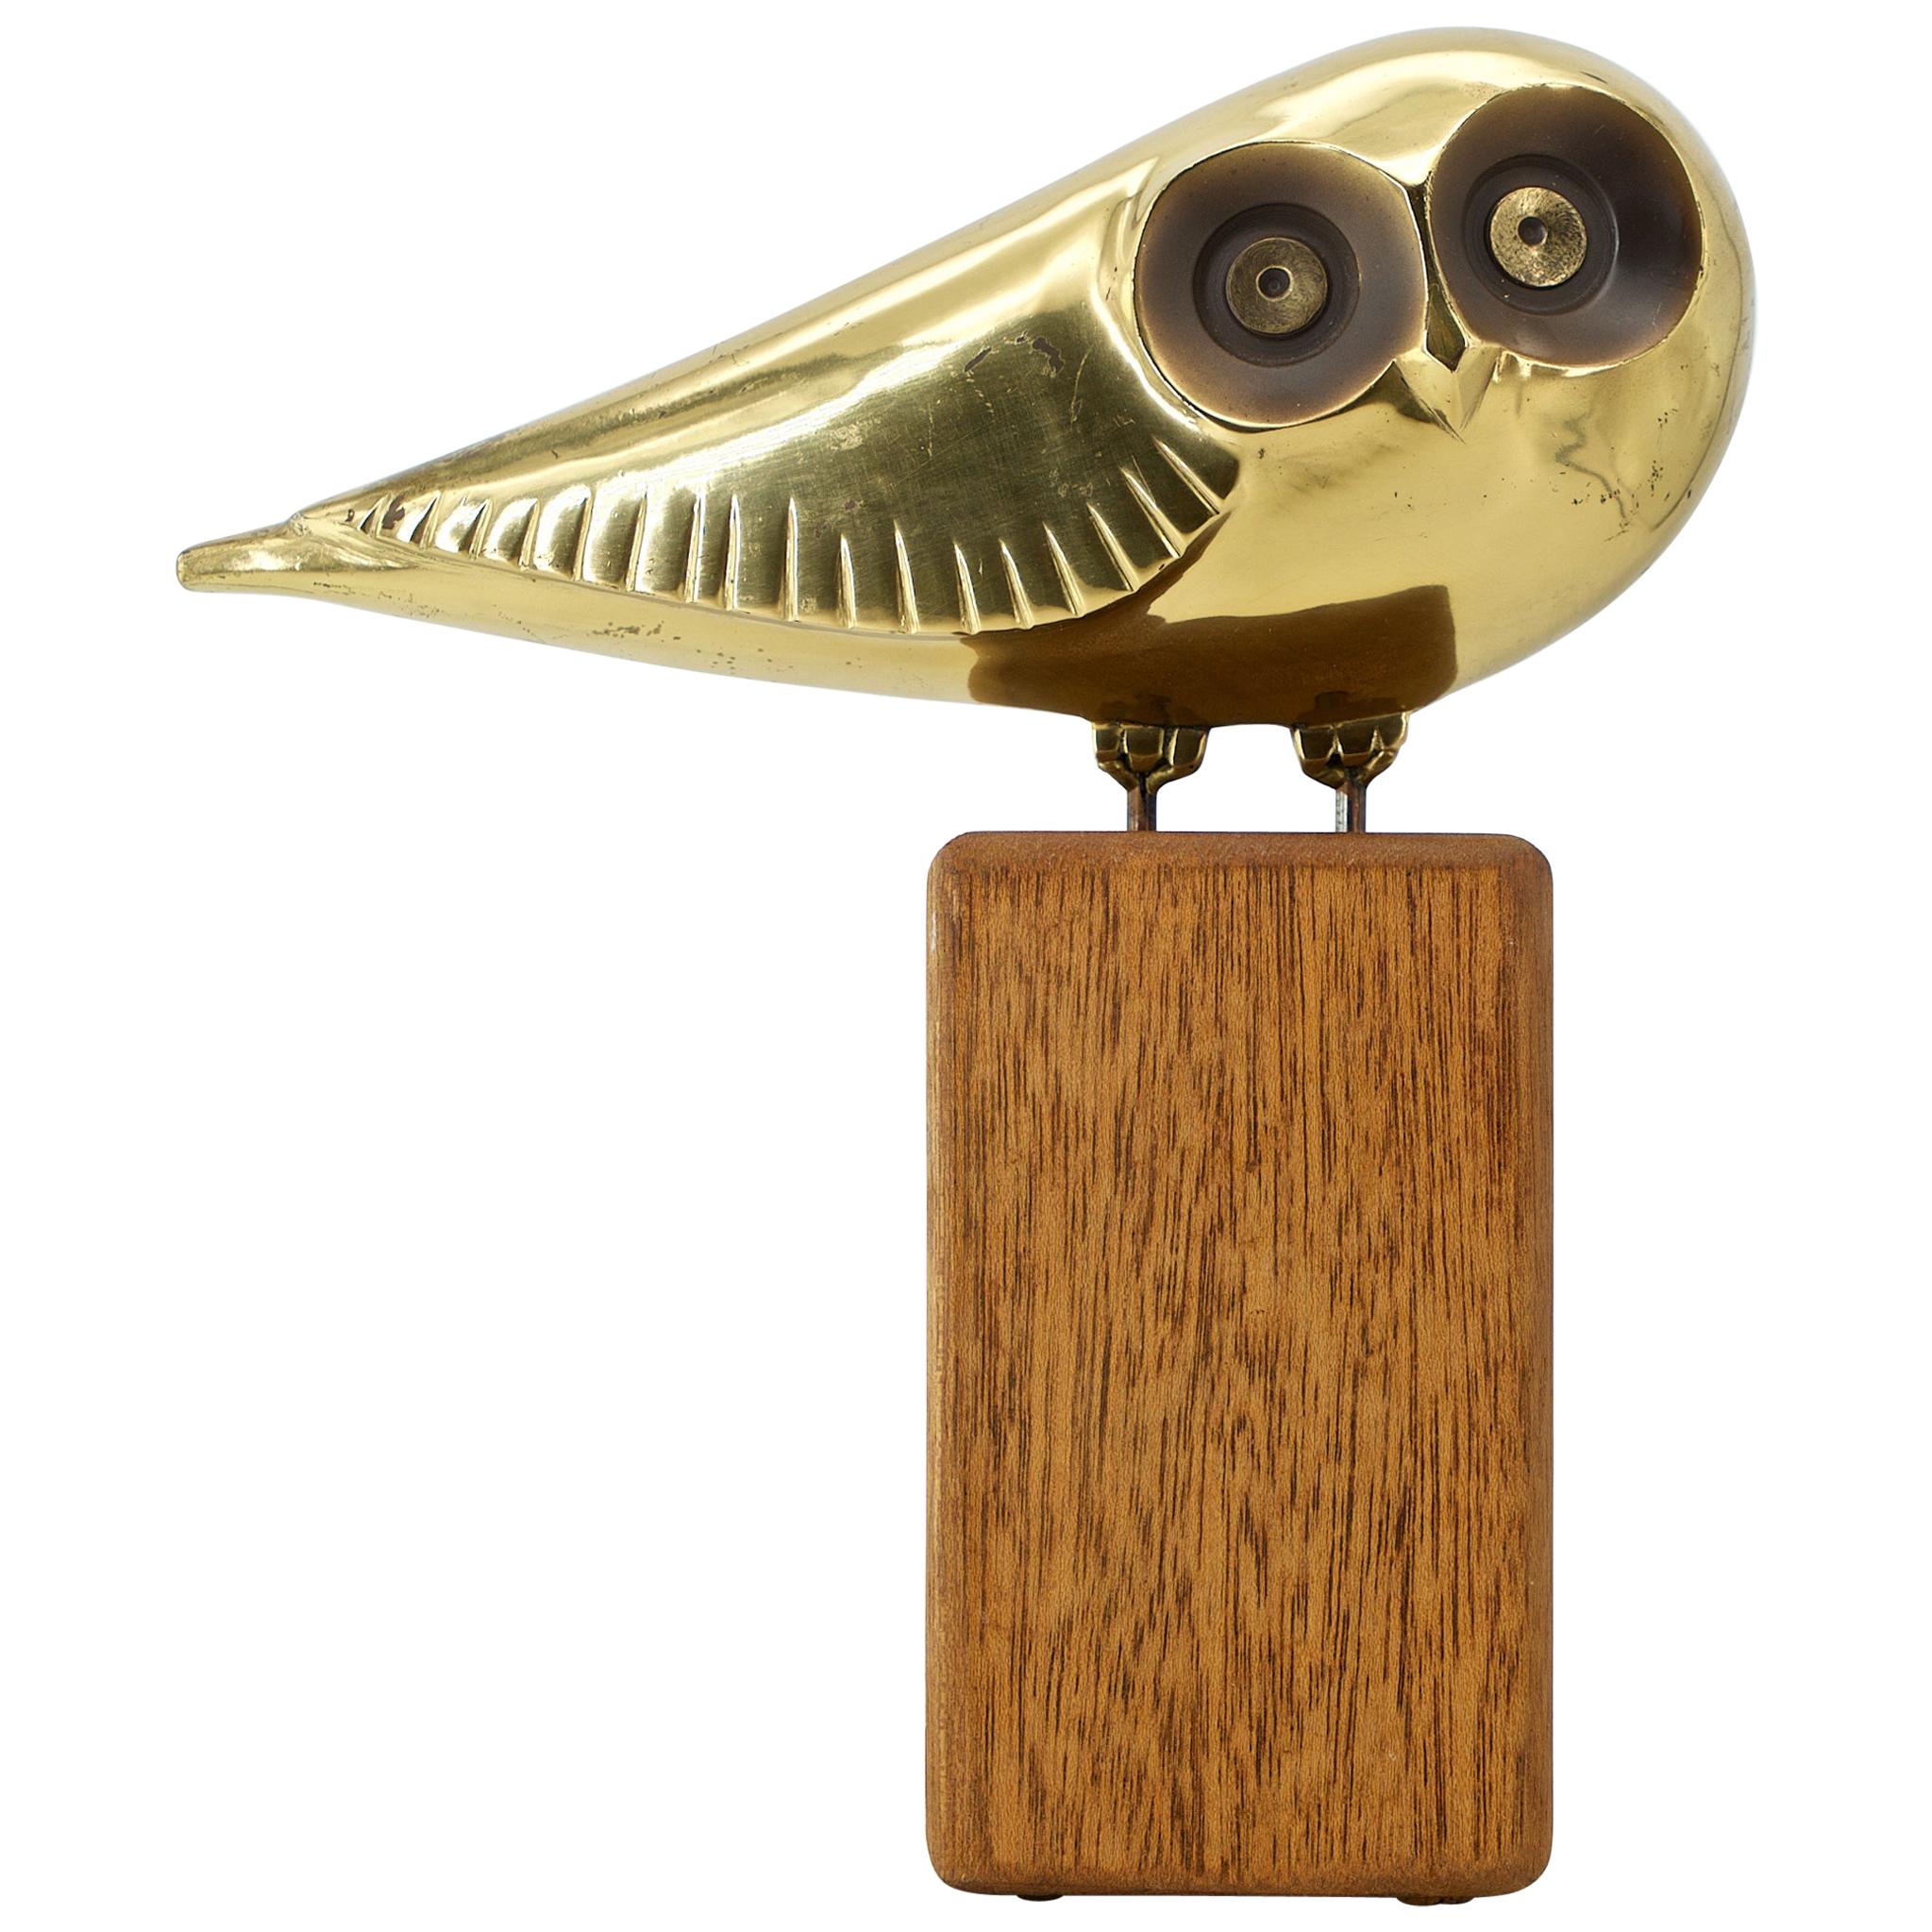 1980s Midcentury Brass Owl Stylized Art Space Age Regency Bird Sculpture C.Jere For Sale